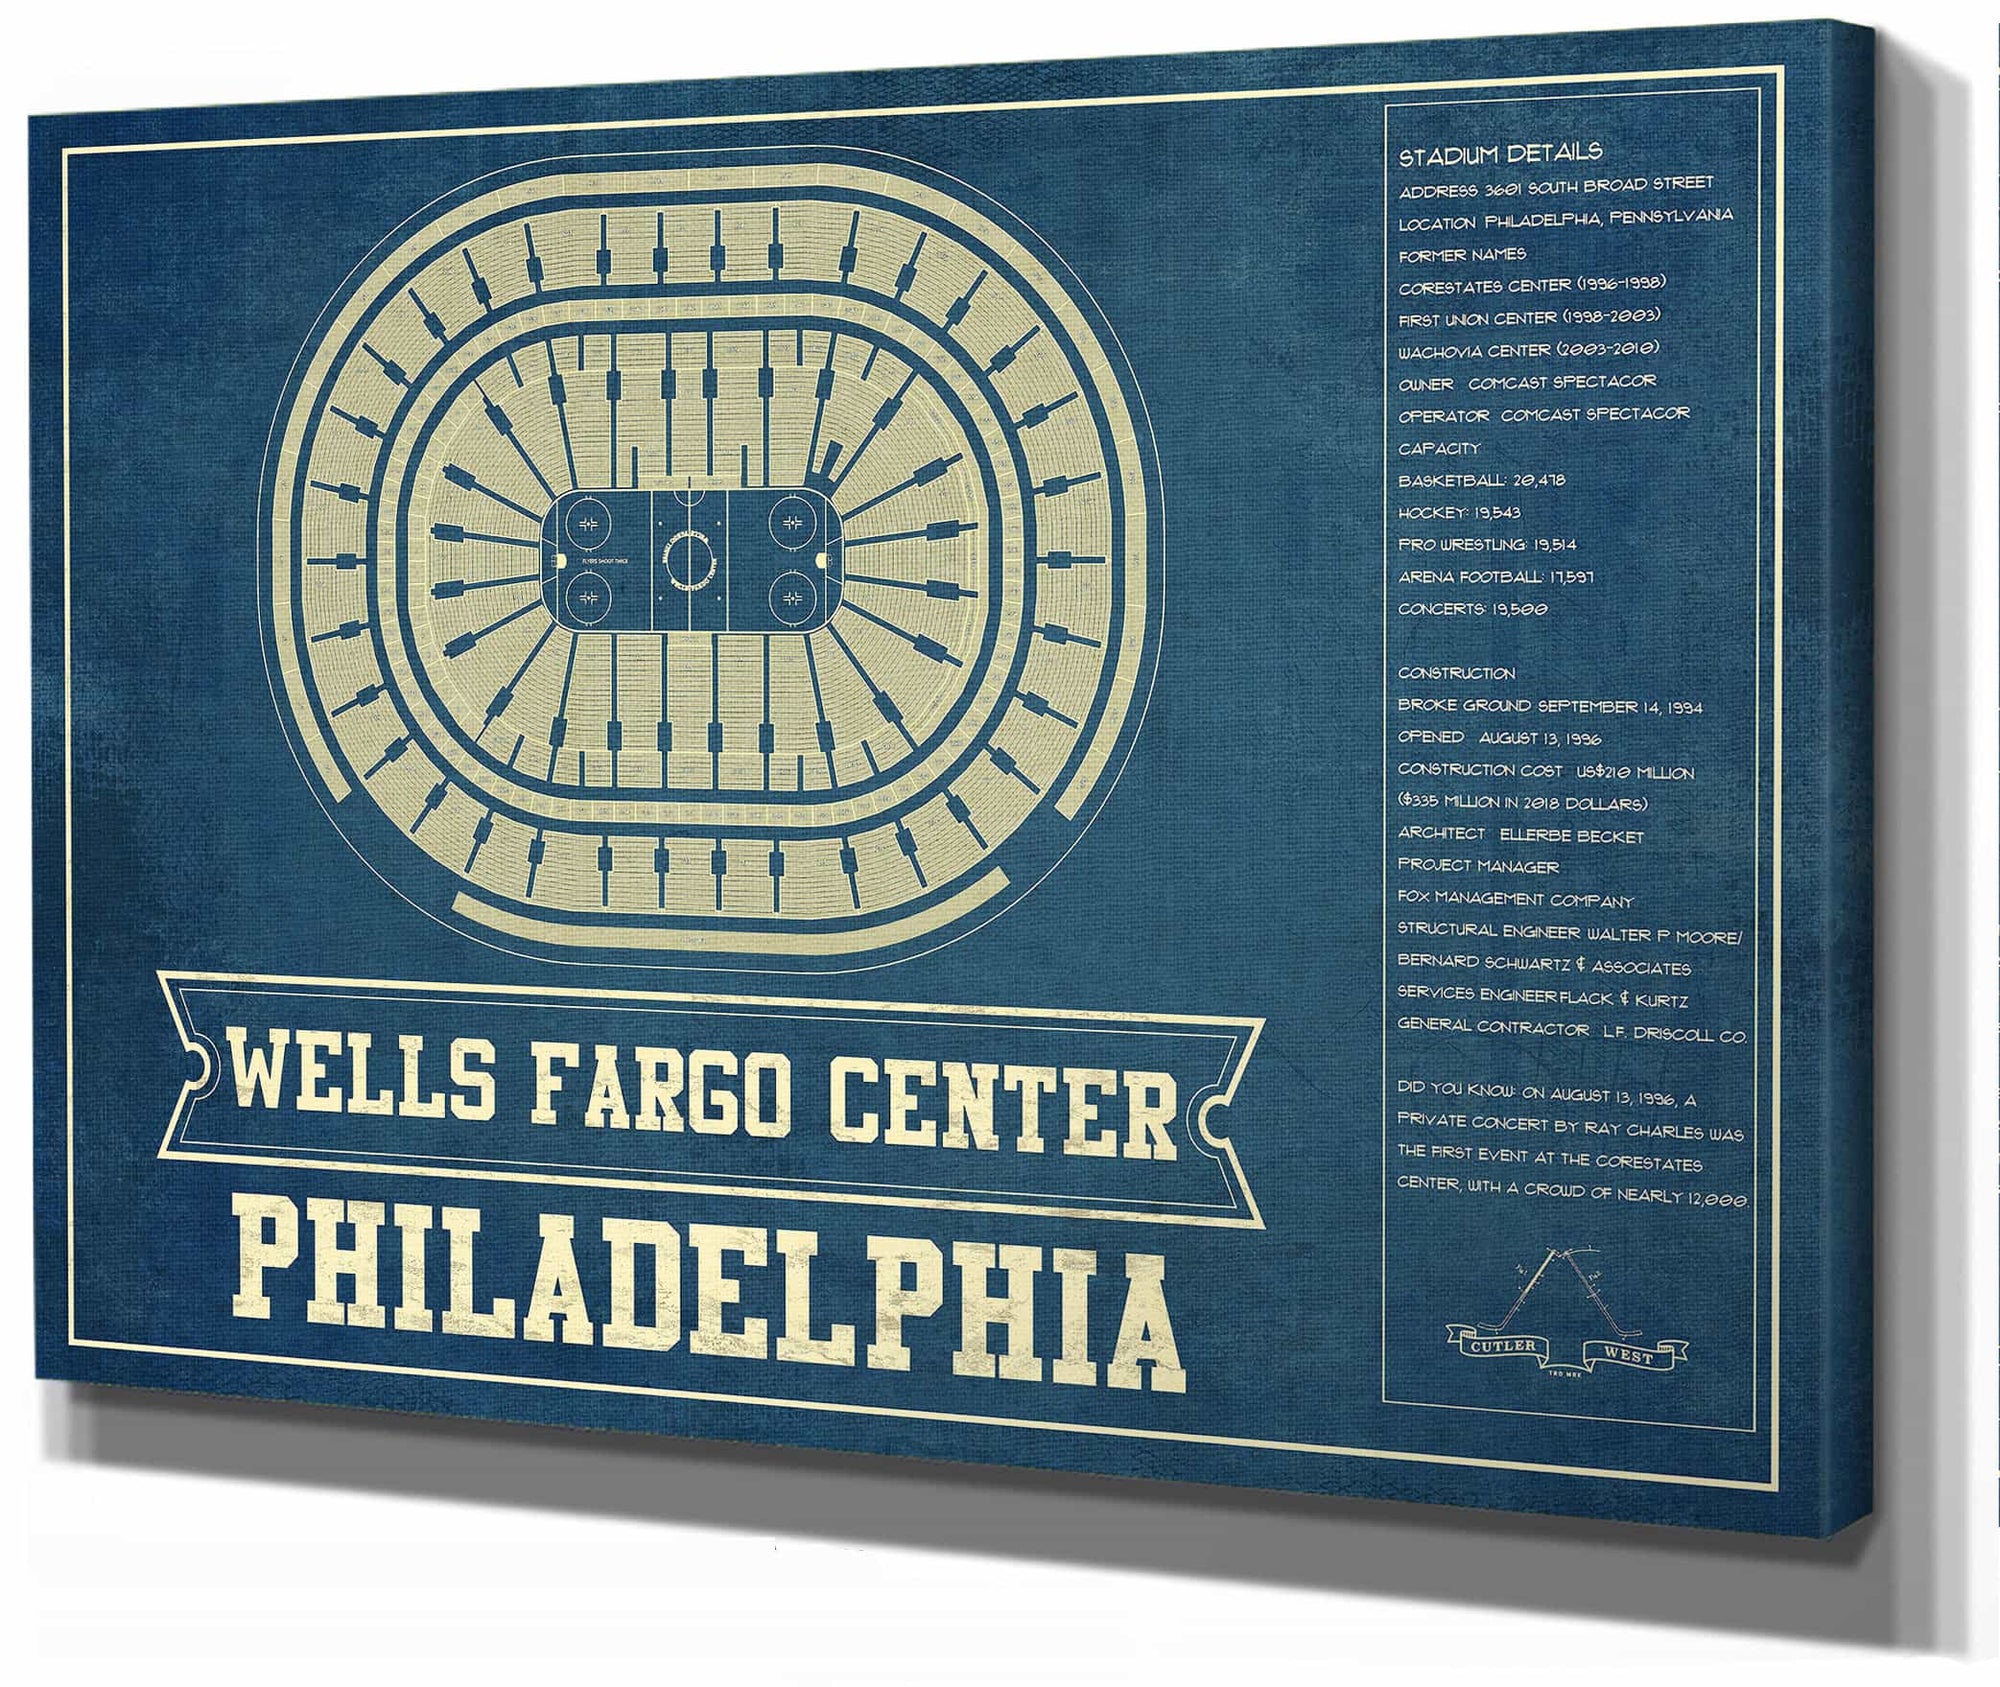 Philadelphia Flyers Wells Fargo Center Philadelphia Seating Chart - Vintage Hockey Team Color Print